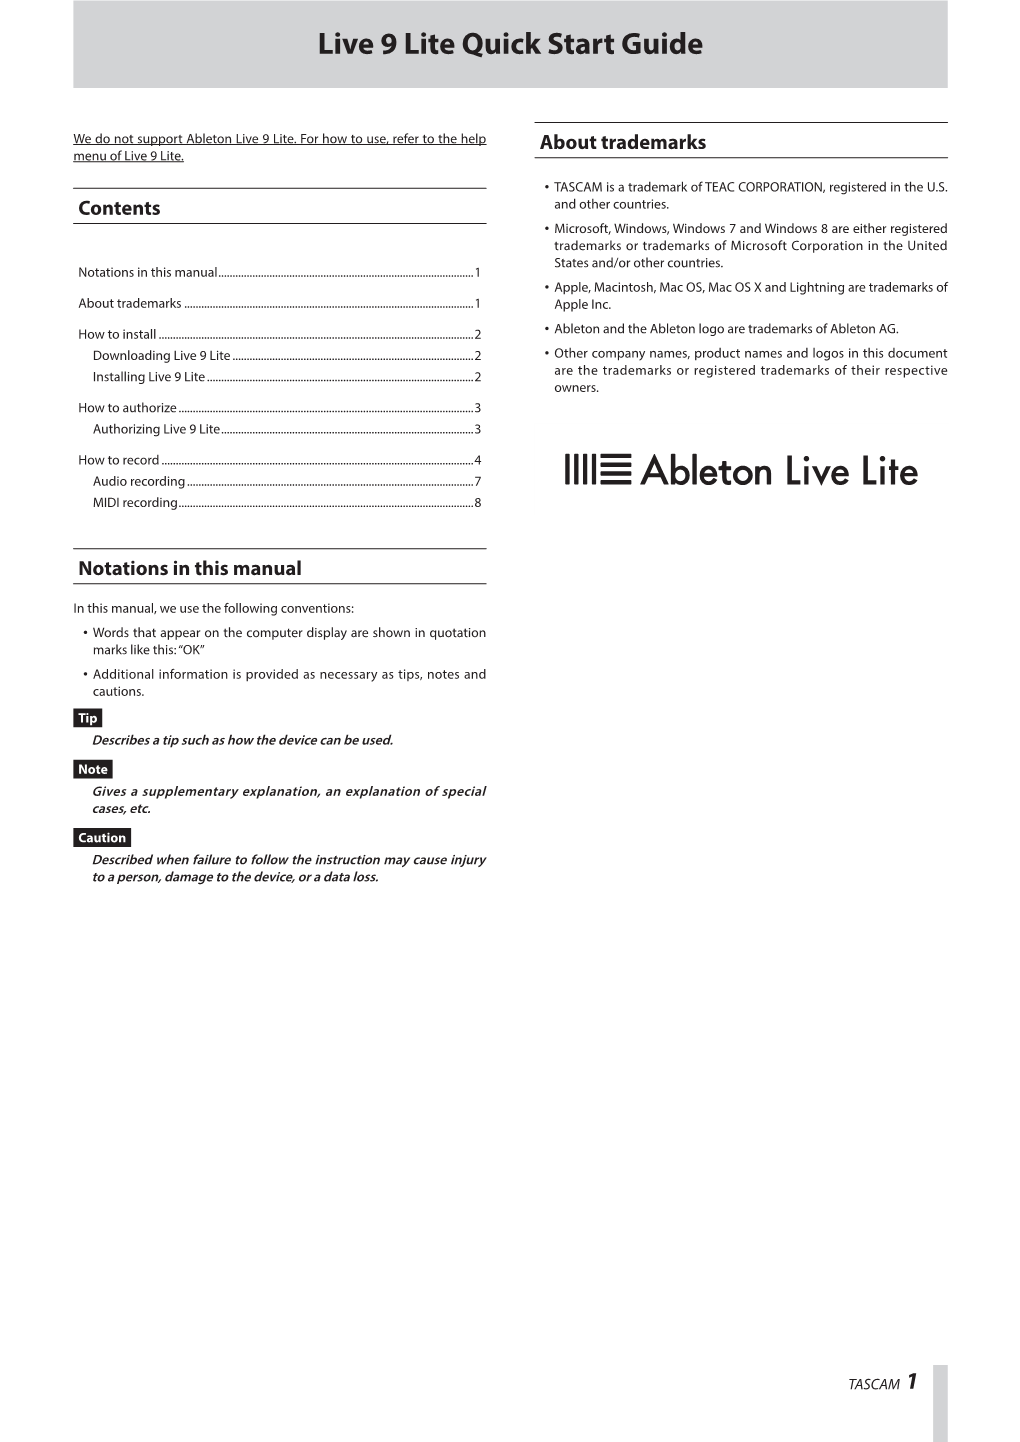 Quick Start Guide for Ableton Live Lite